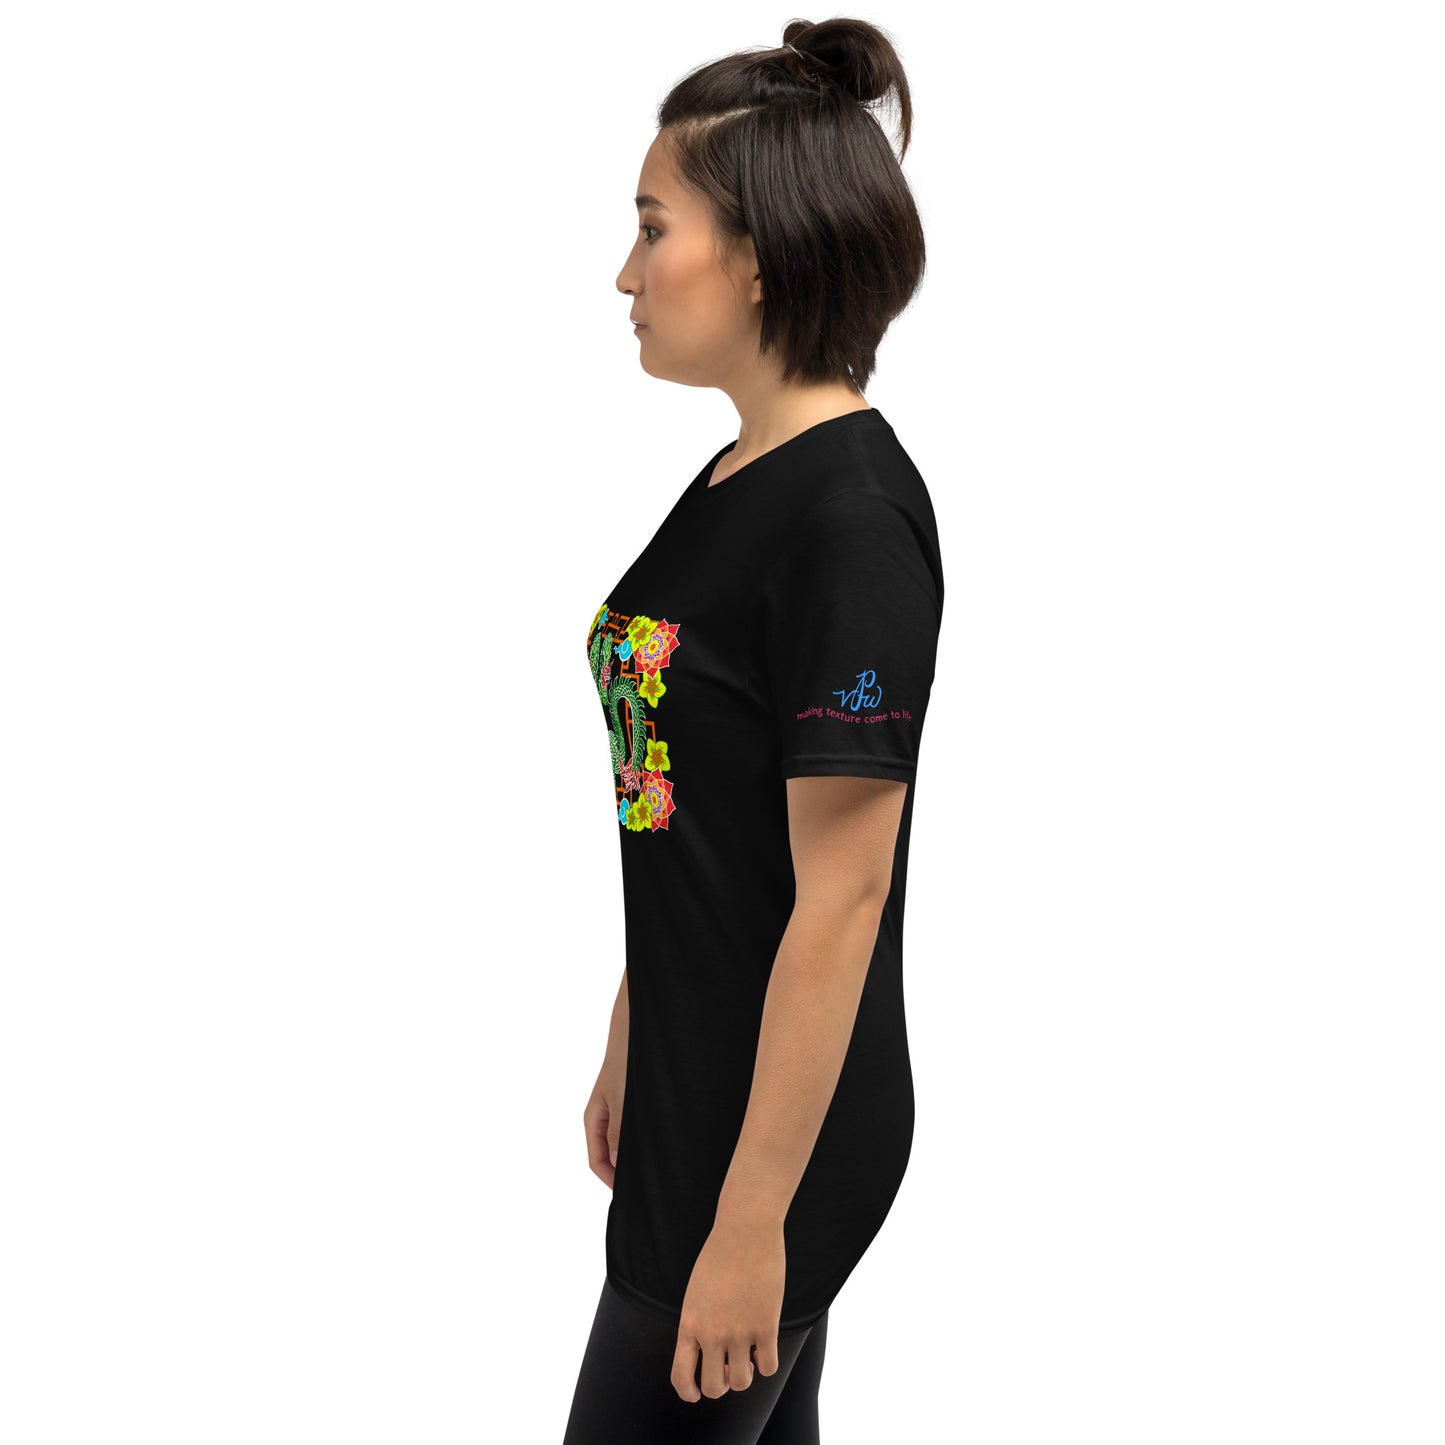 Floral Dragons Short-Sleeve (Front Design) Unisex T-Shirt